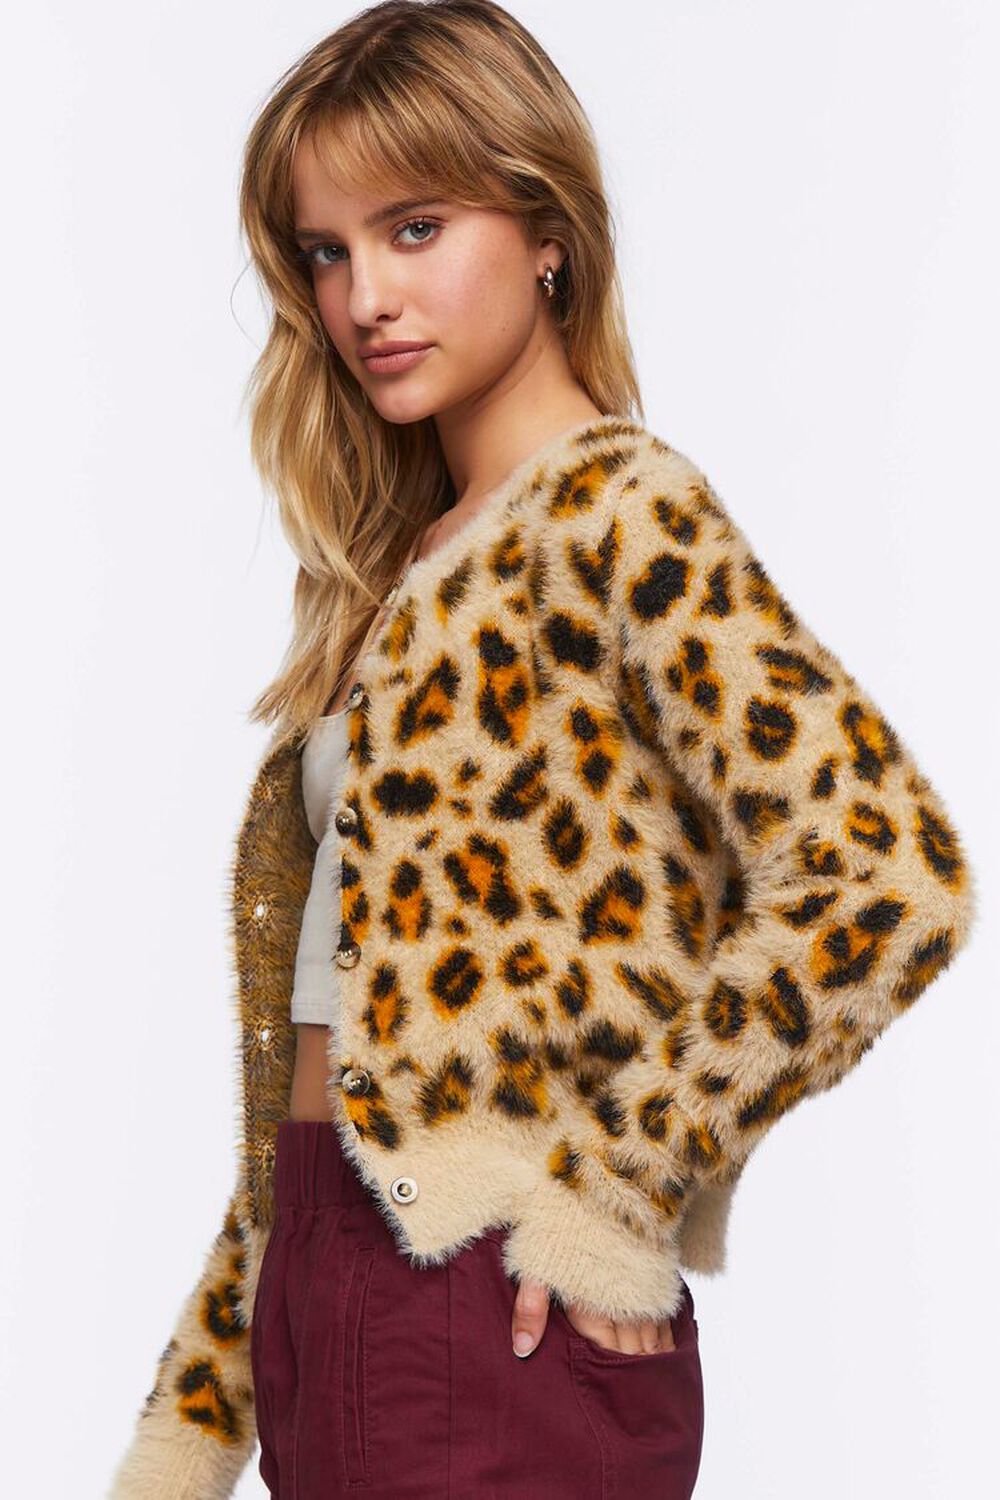 BROWN/MULTI Fuzzy Knit Leopard Cardigan Sweater, image 2